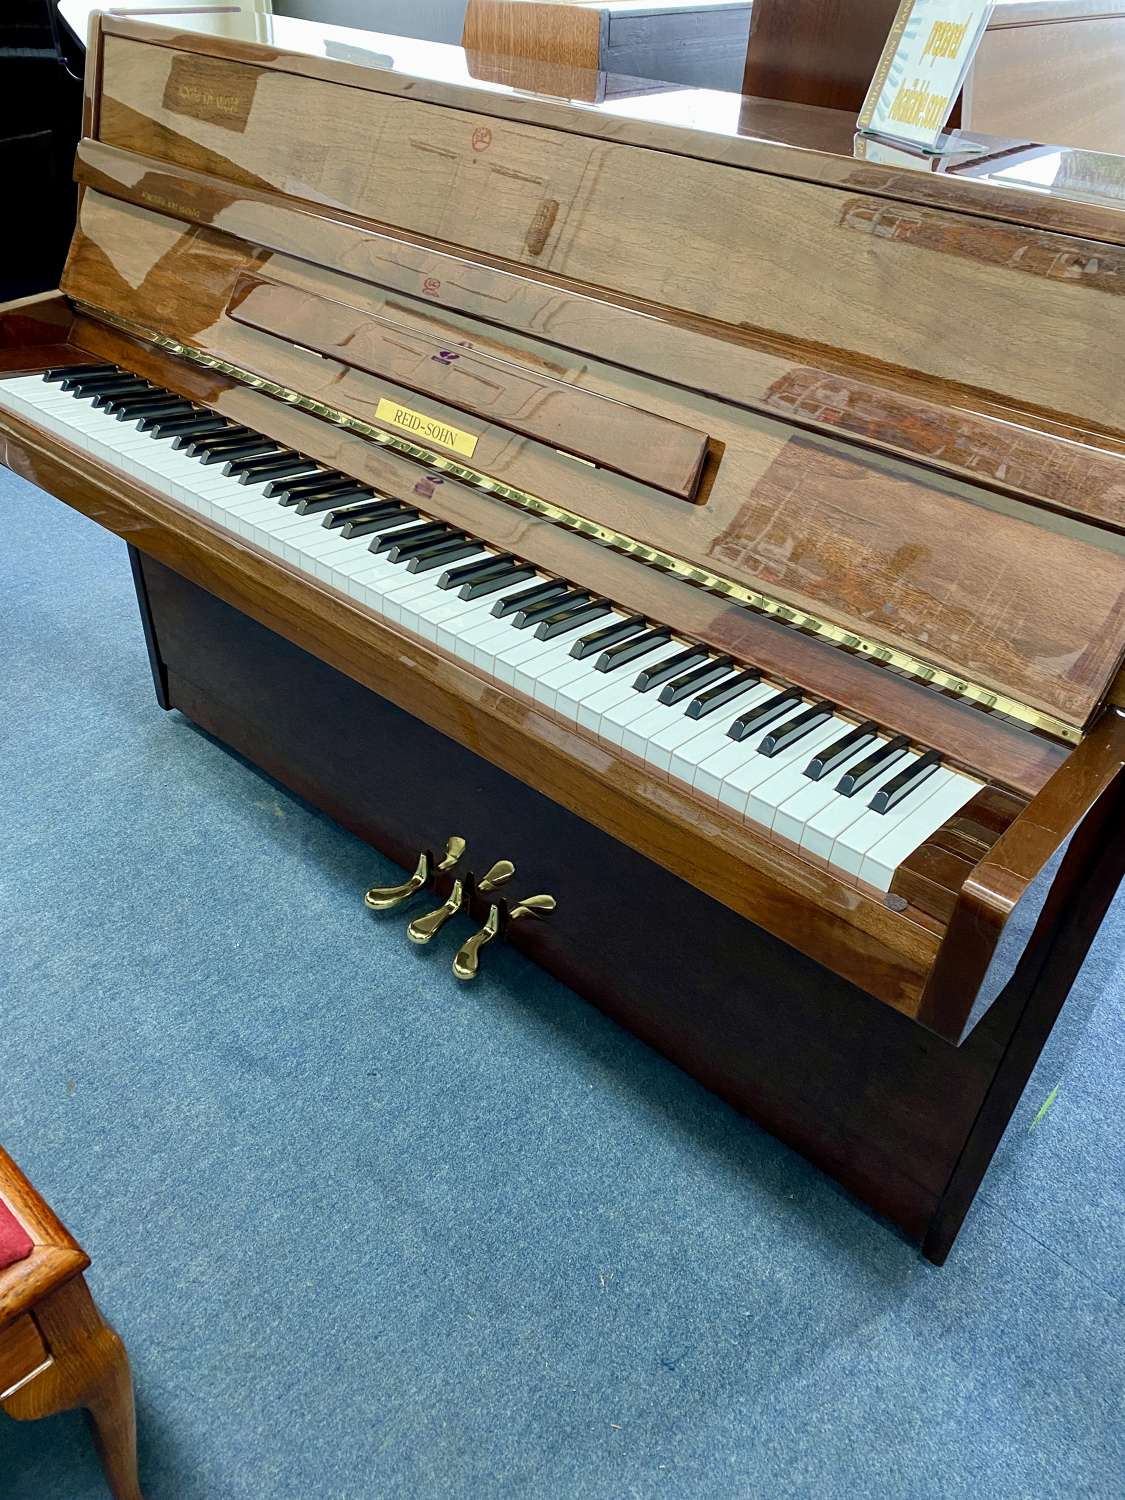 Reid-sohn piano for sale